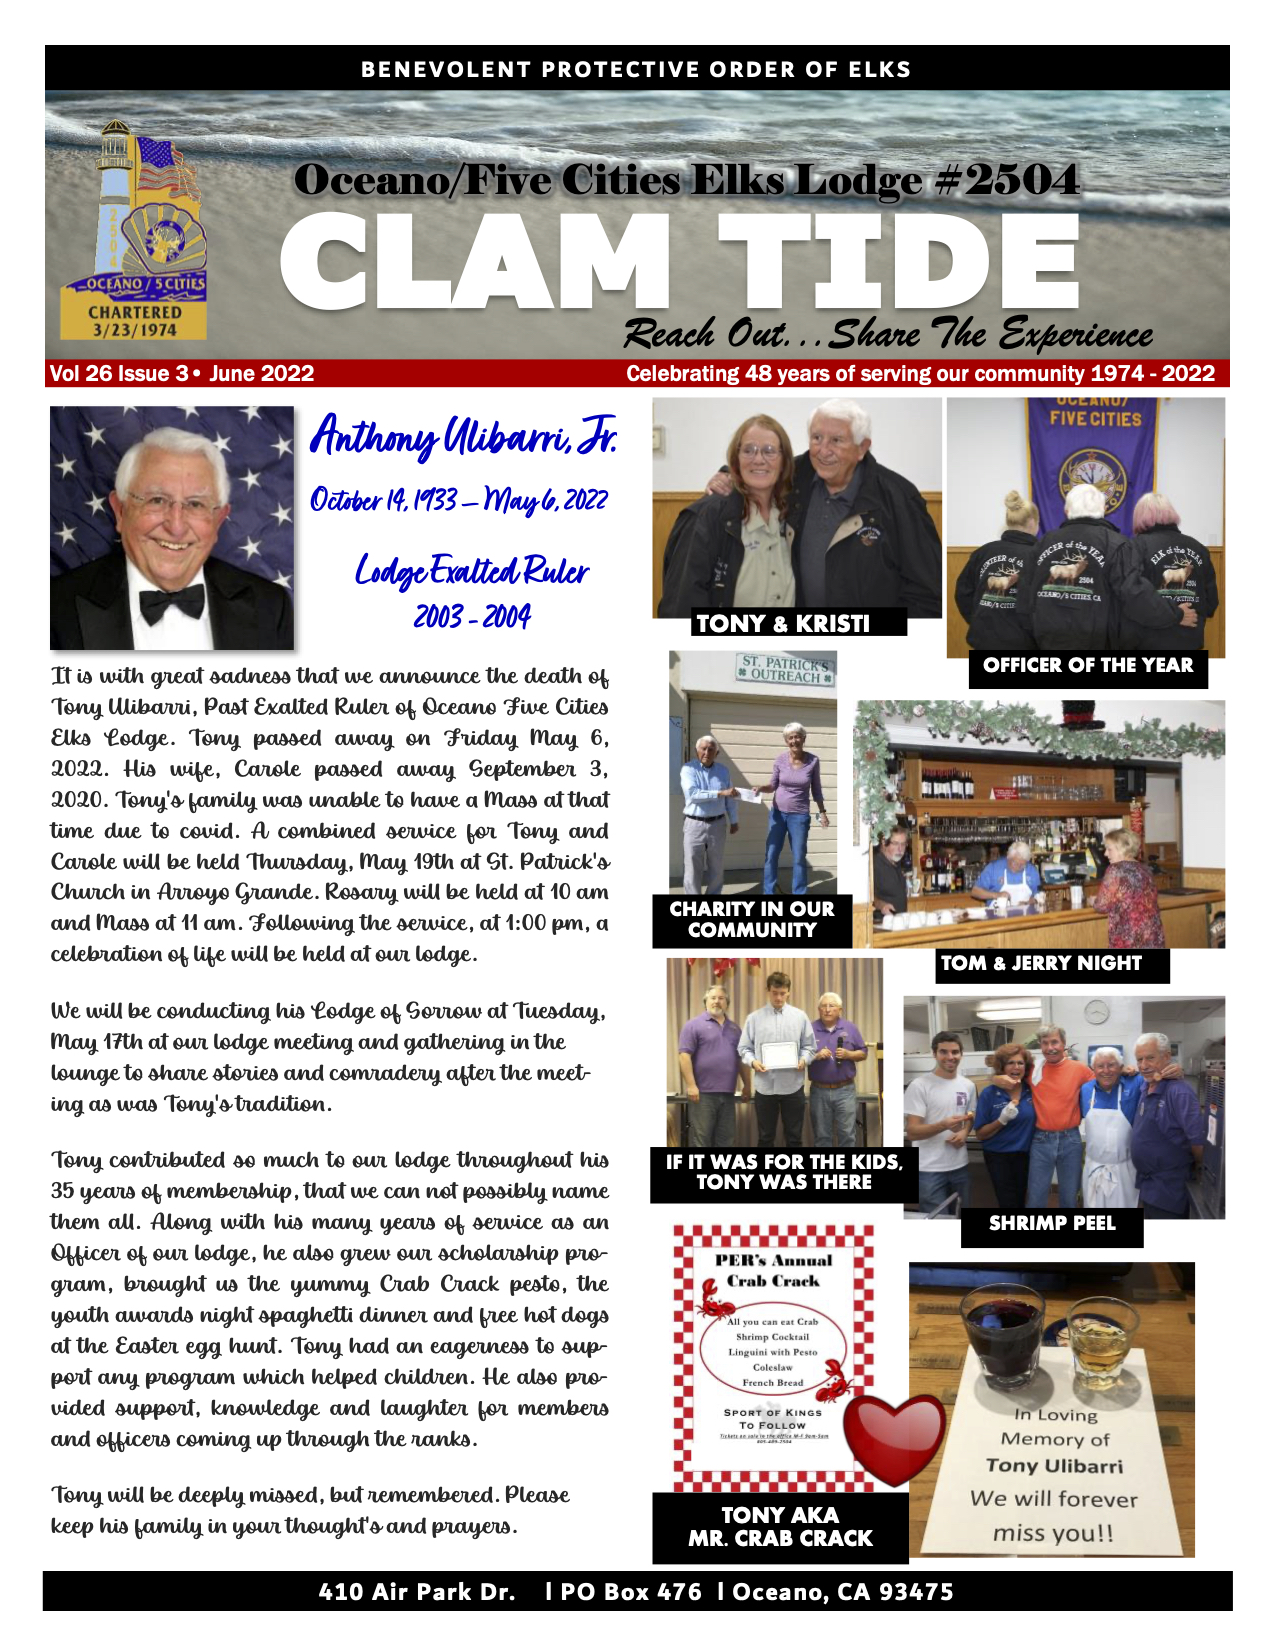 Clam Tide Newsletter - Oceano Elks 2504